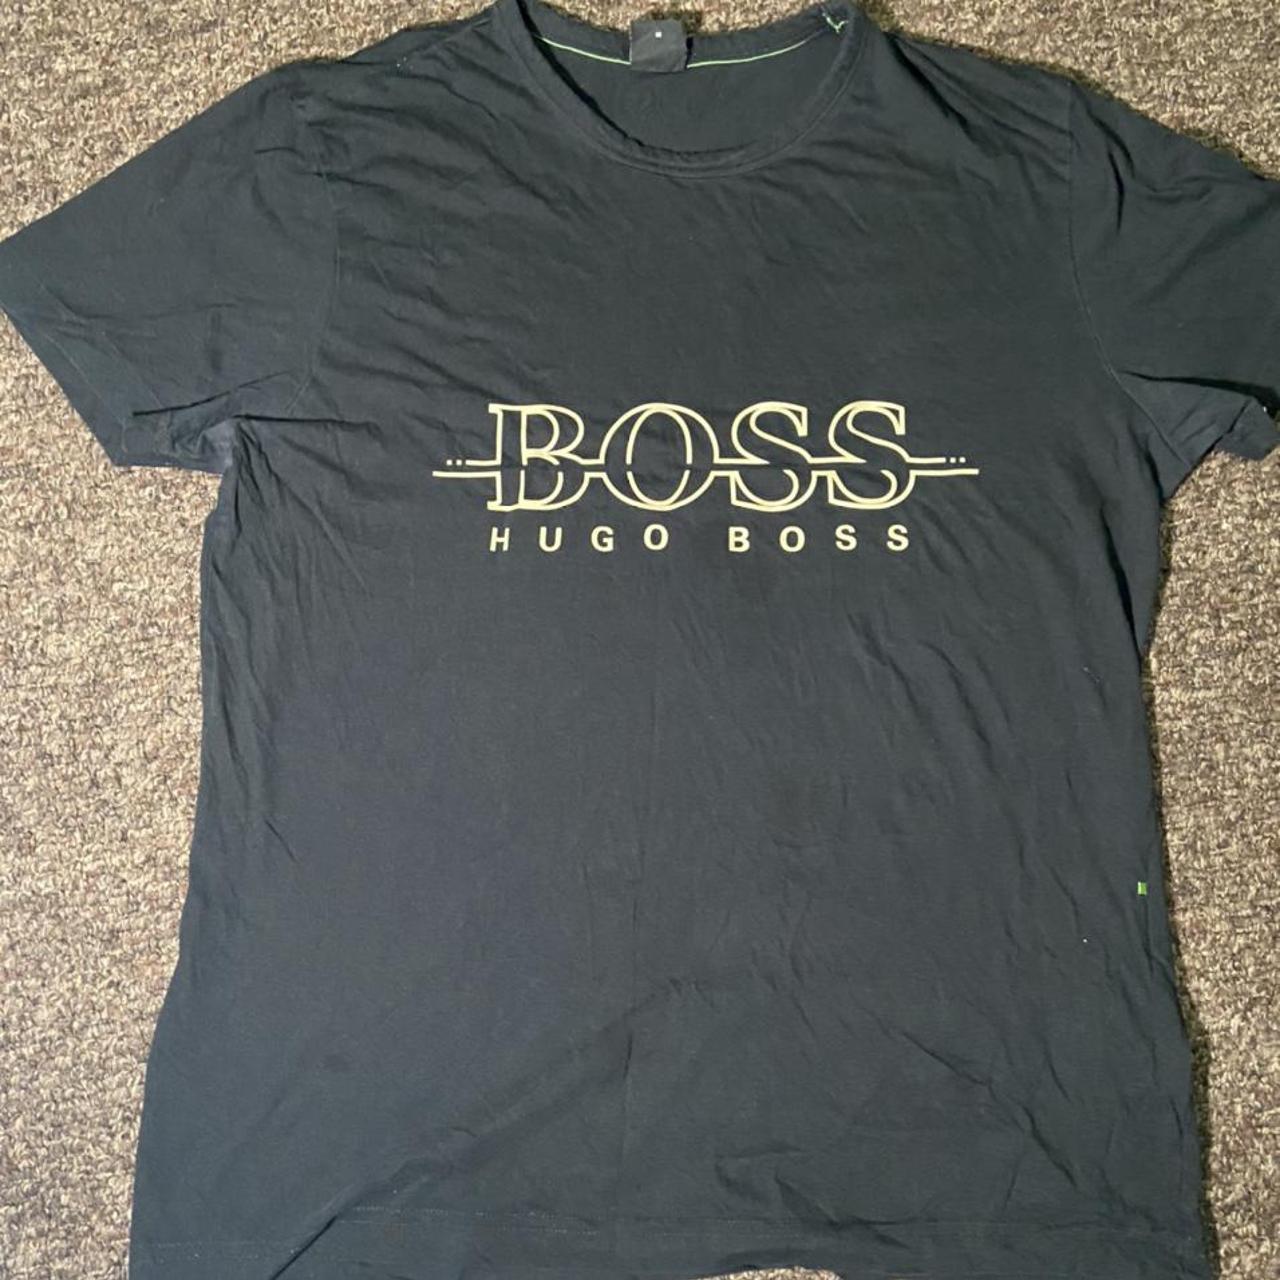 Product Image 1 - Hugo Boss T-shirt
100% authentic
Used -